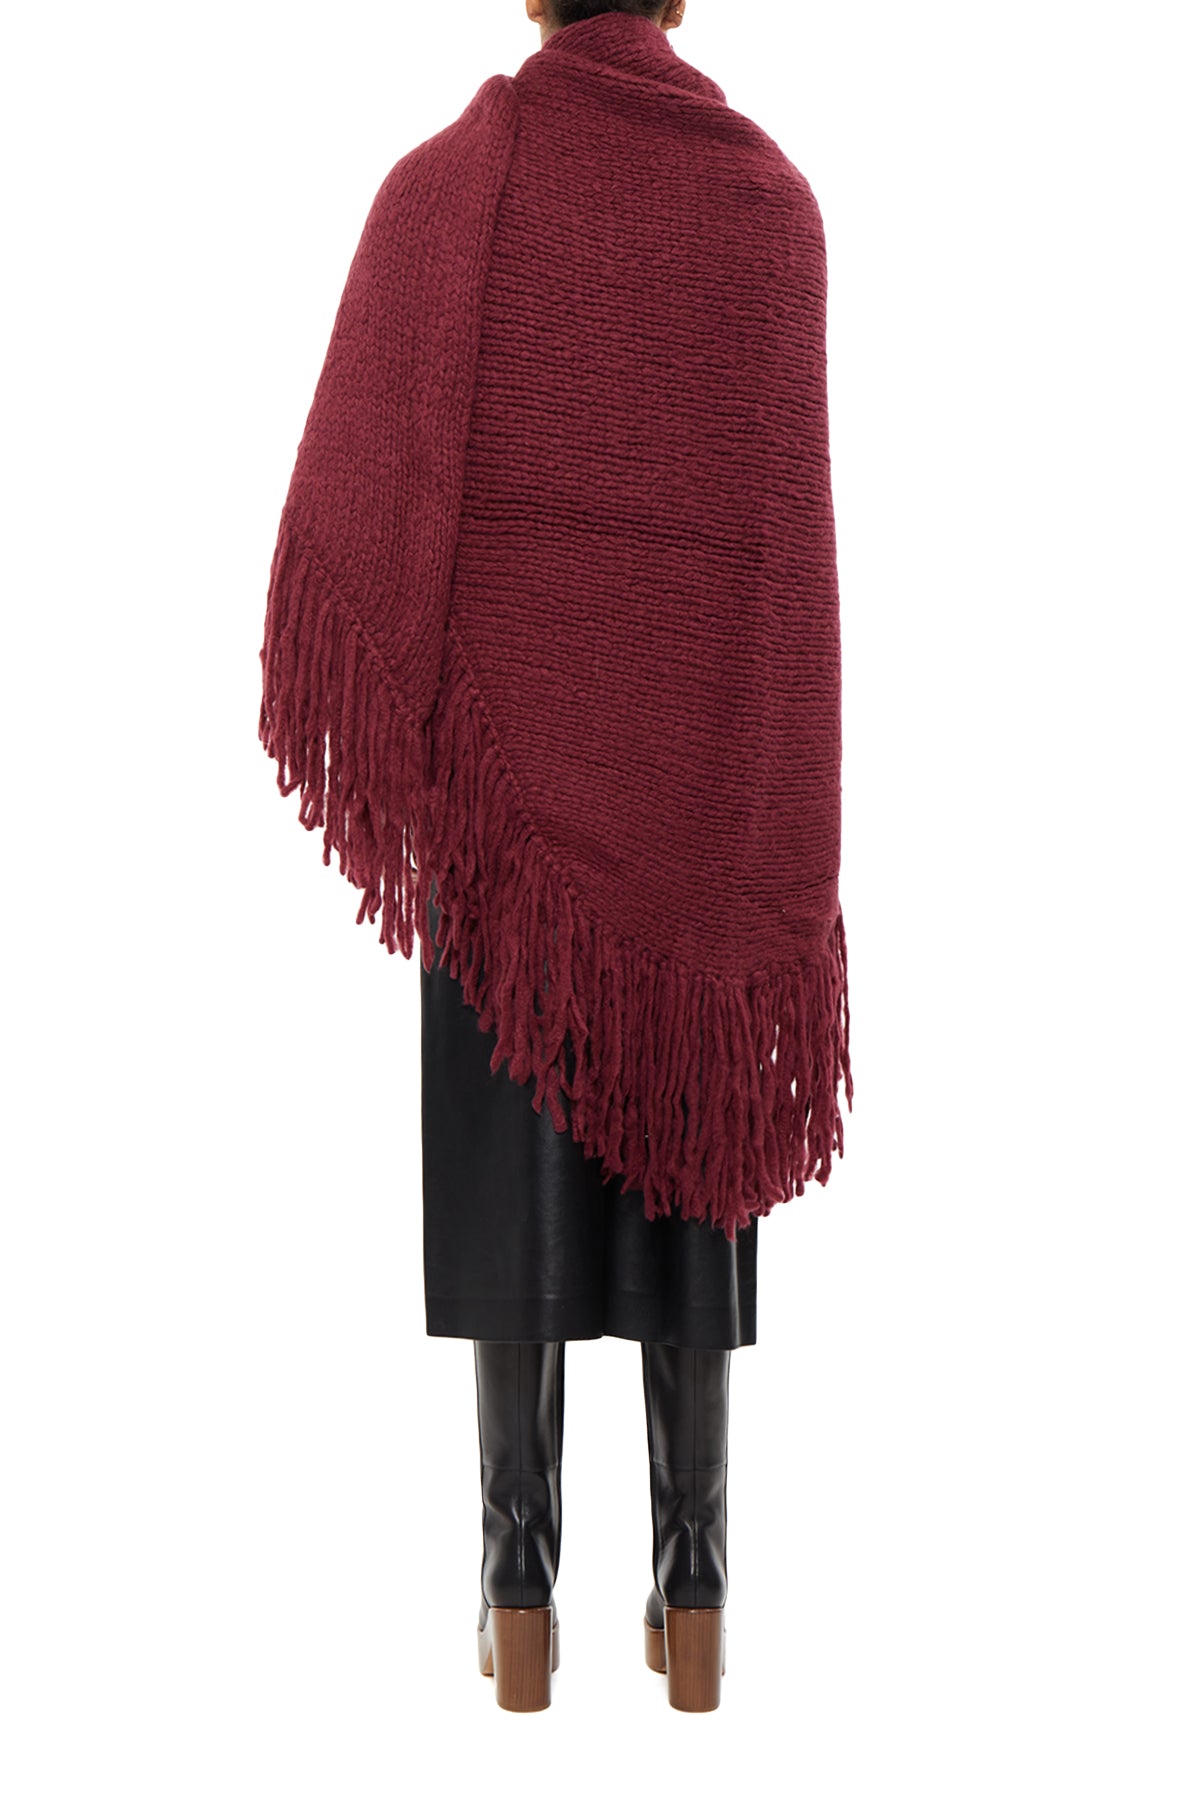 Lauren Knit Wrap in Windsor Wine Welfat Cashmere